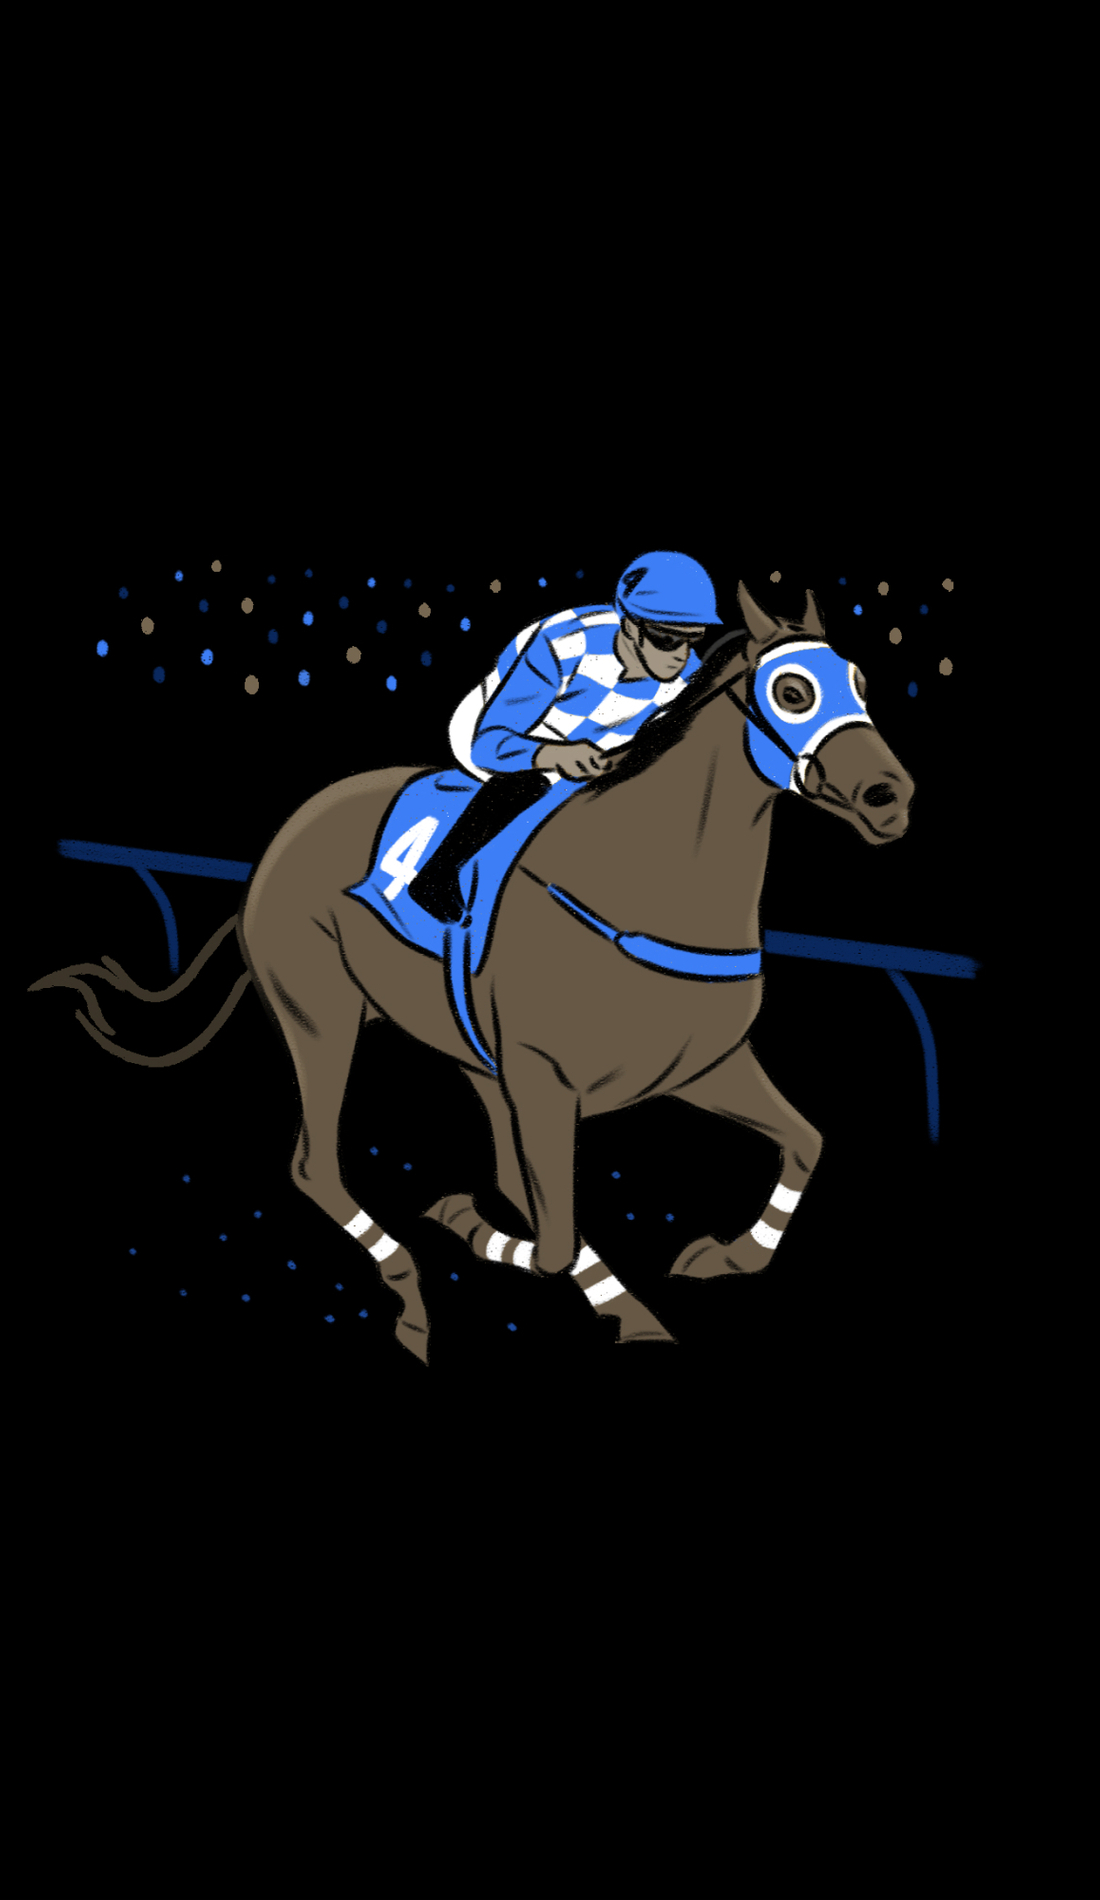 A Saratoga Horse Racing live event